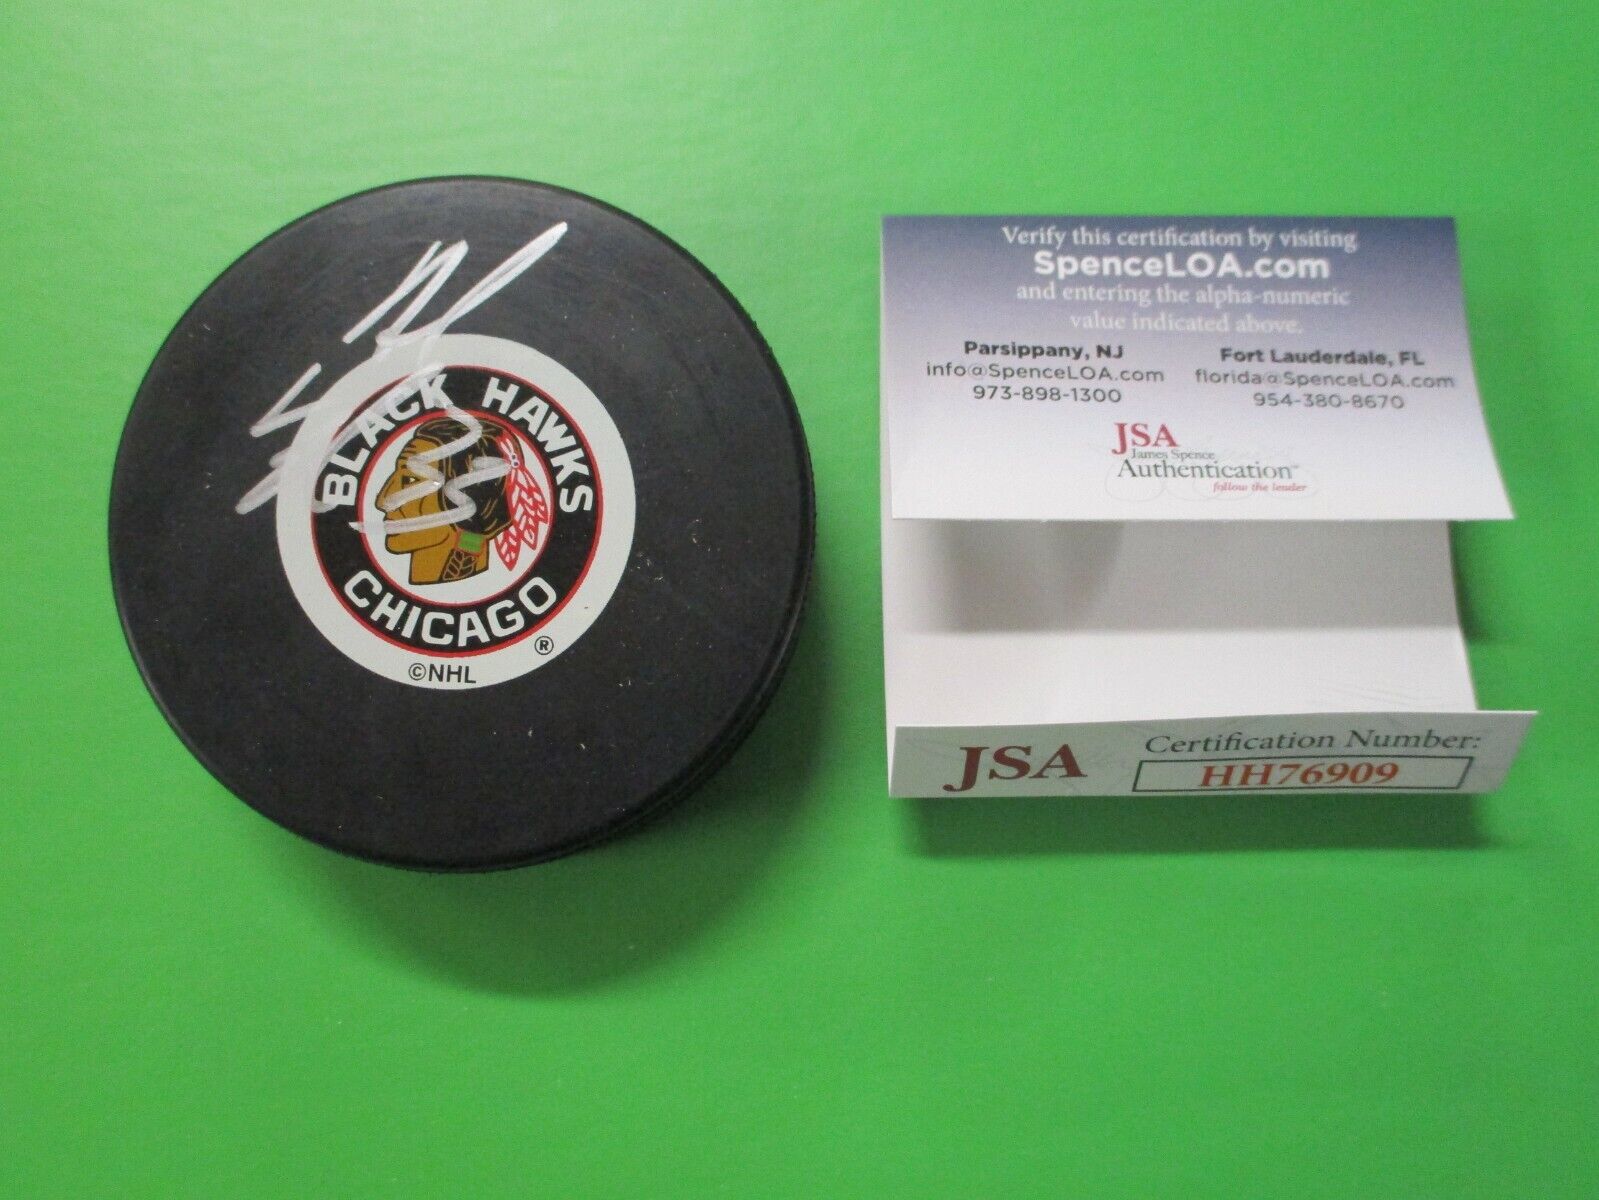 Dustin Byfuglien Chicago Black Hawks Autograph NHL Licensed Hockey Puck with JSA